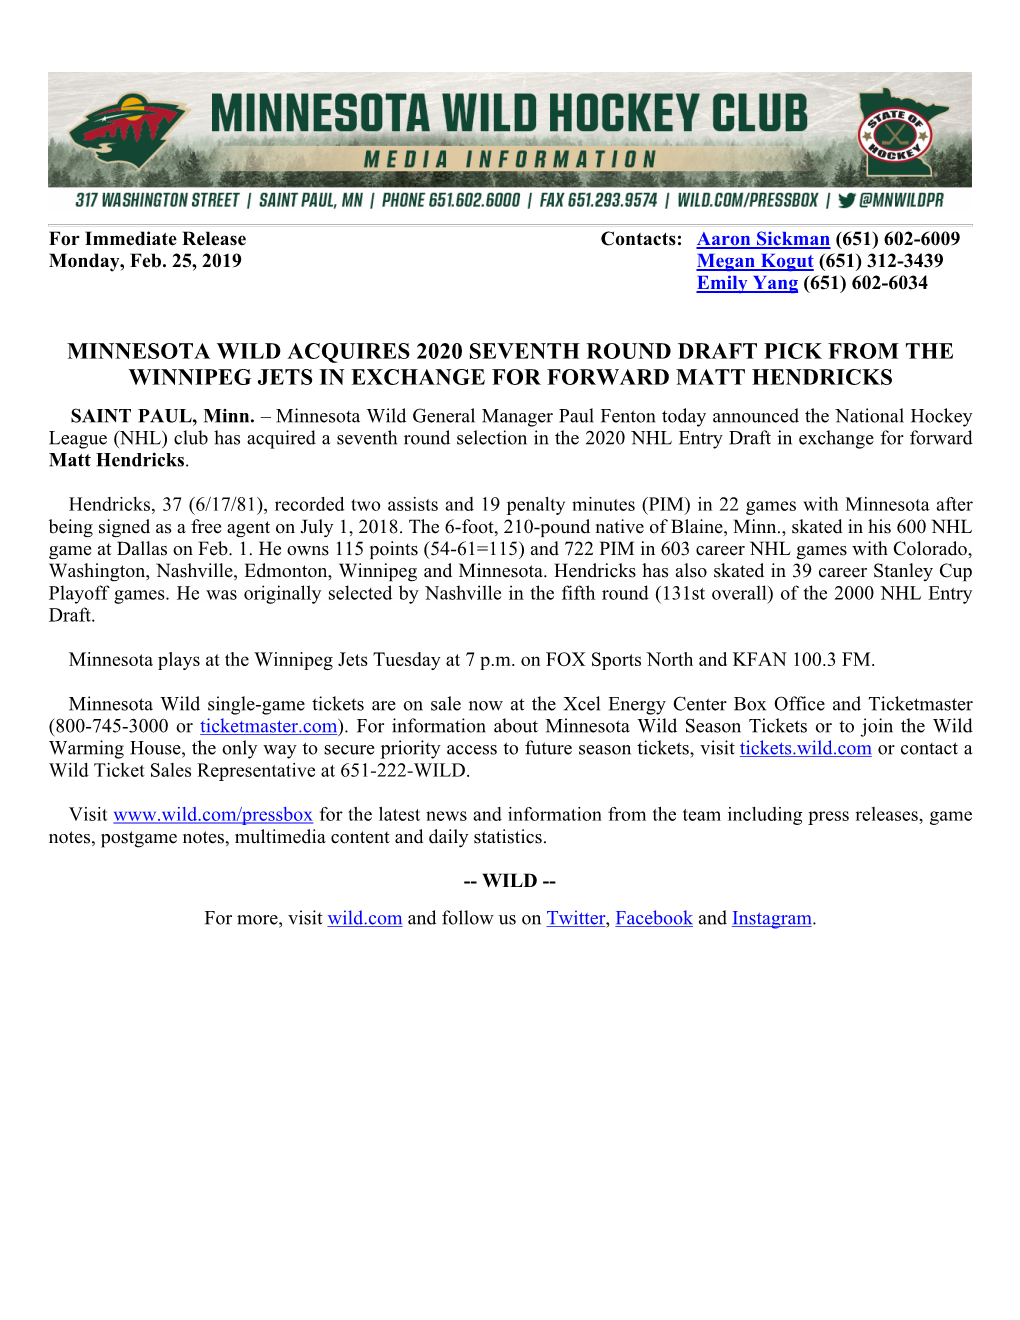 Minnesota Wild Acquires 2020 Seventh Round Draft Pick from the Winnipeg Jets in Exchange for Forward Matt Hendricks